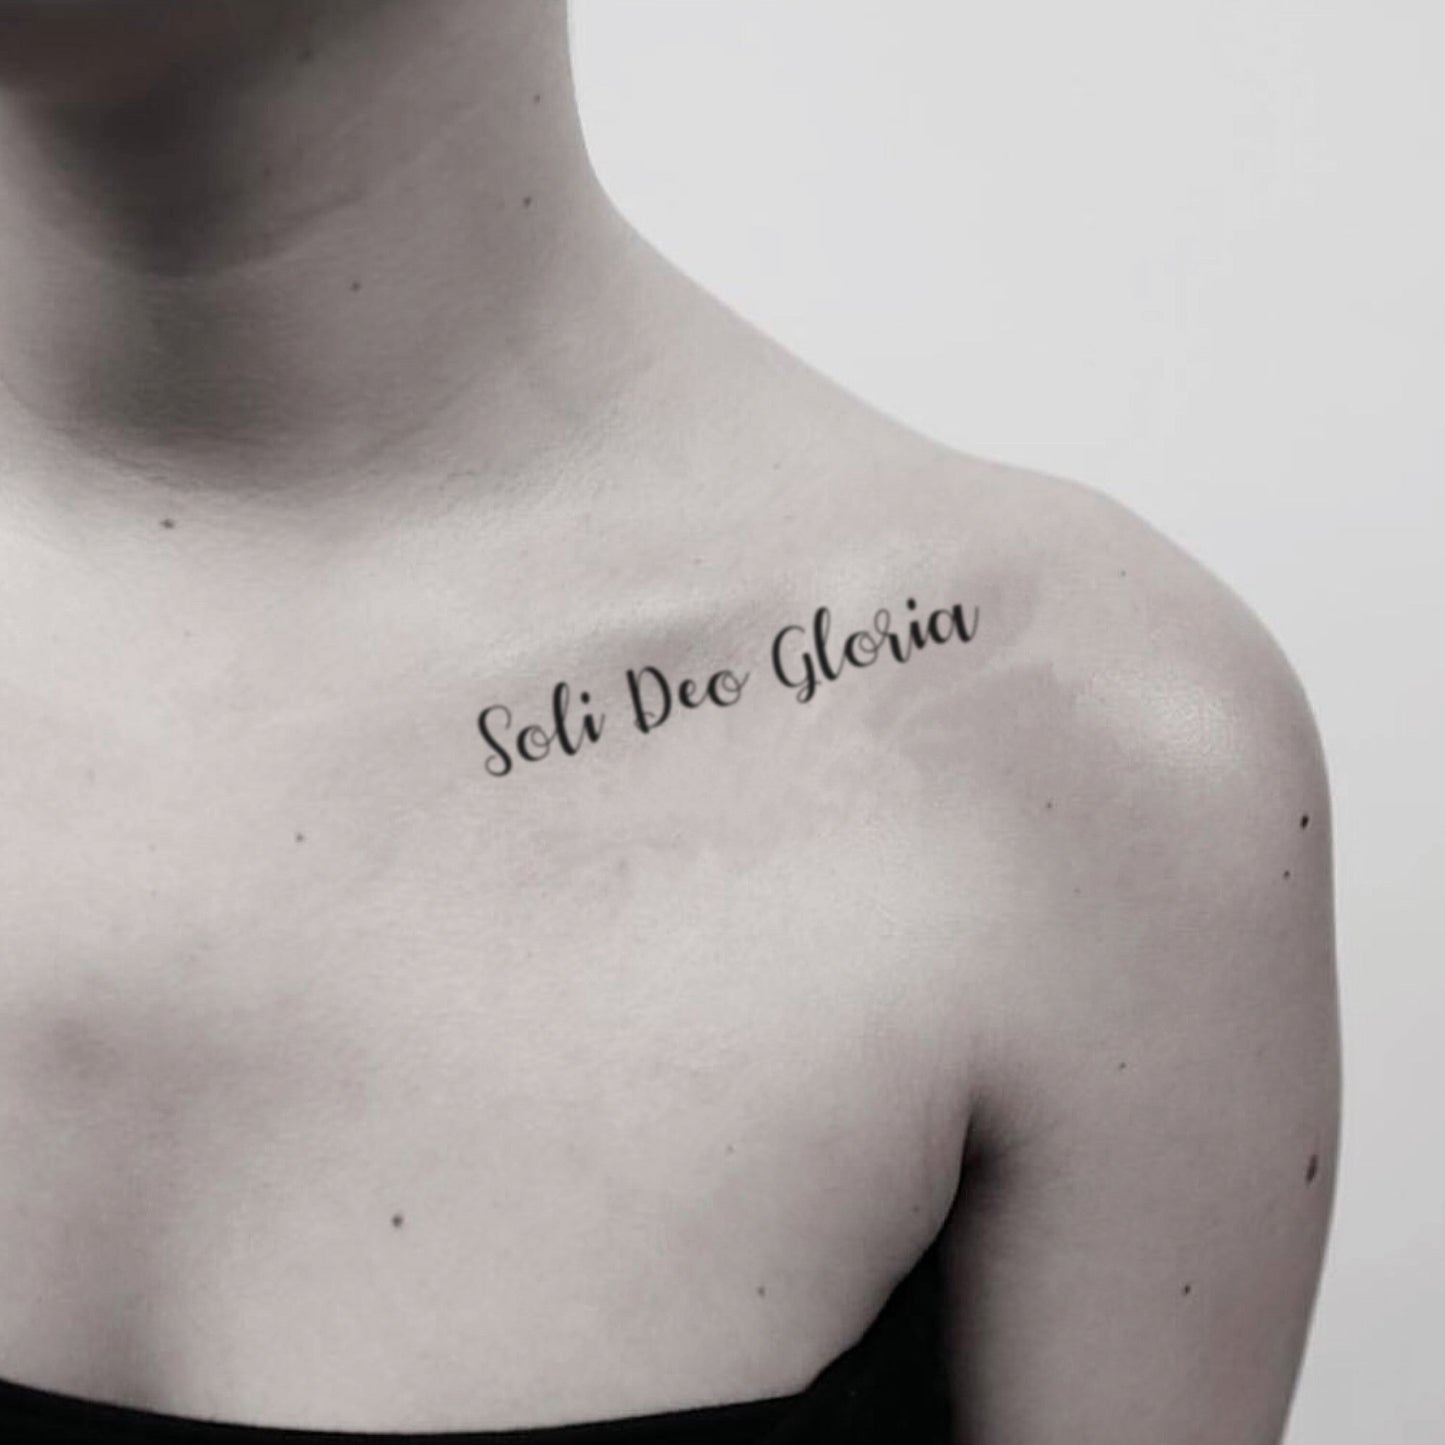 fake medium soli deo gloria lettering temporary tattoo sticker design idea on shoulder